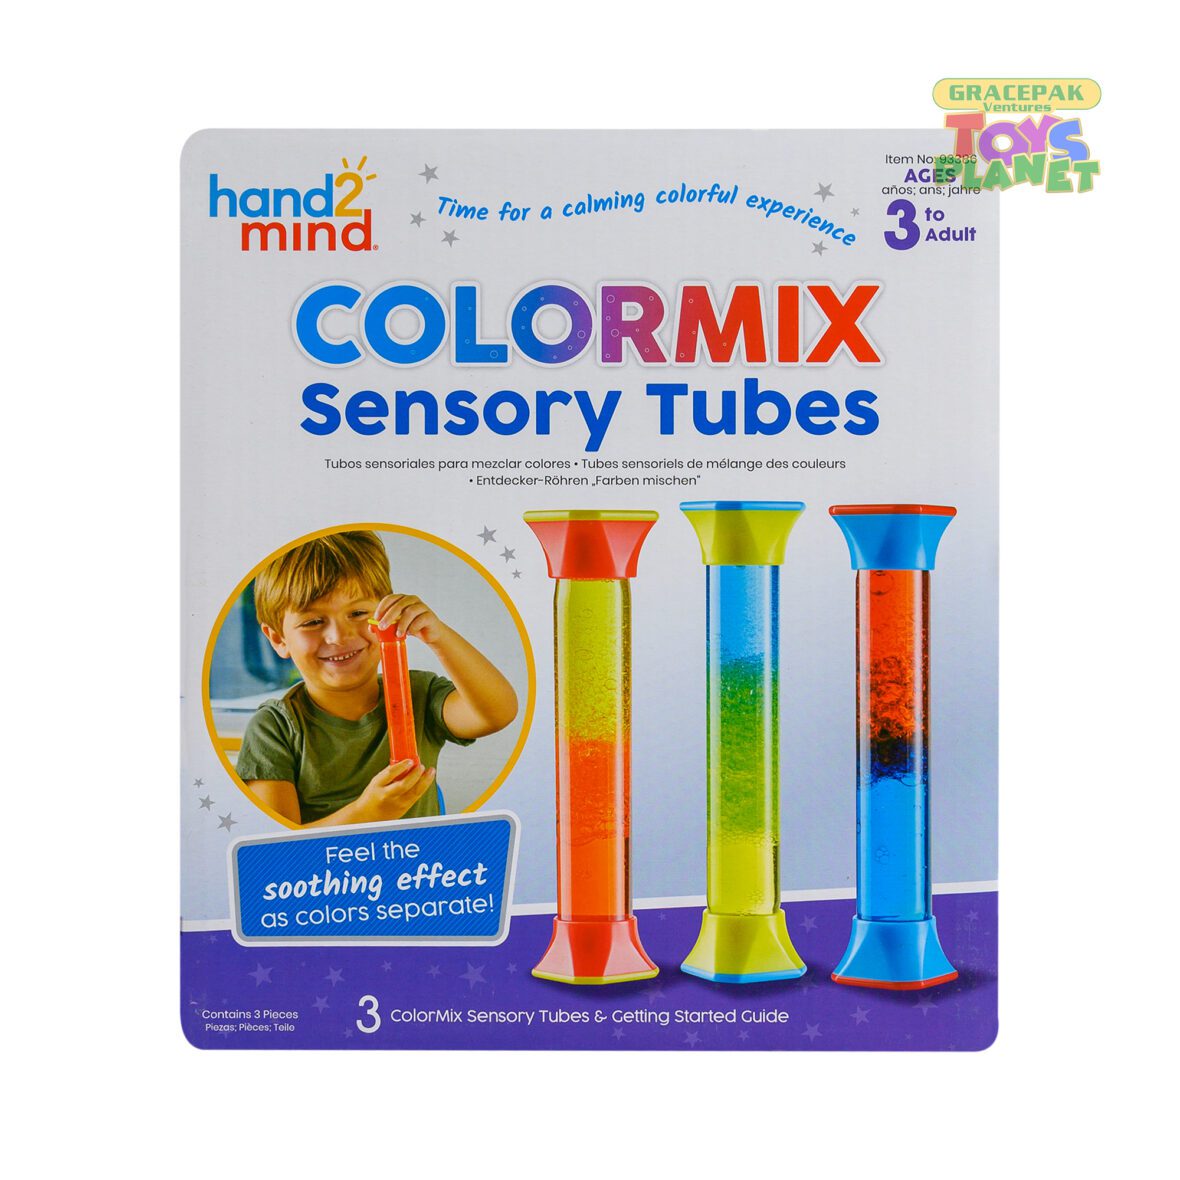 Coloxmix Sensory Tubes